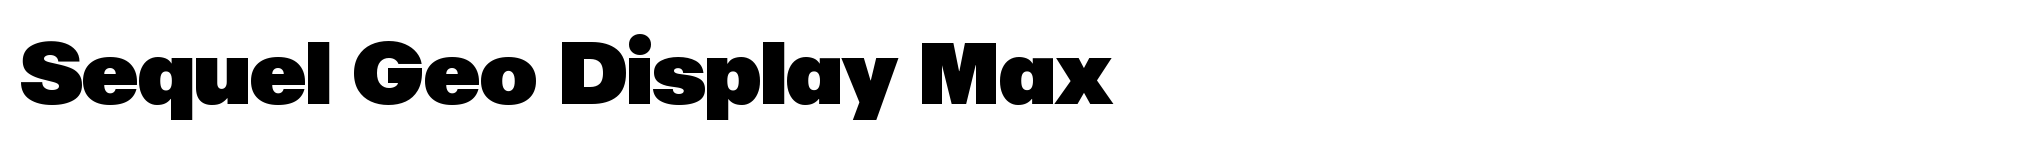 Sequel Geo Display Max image